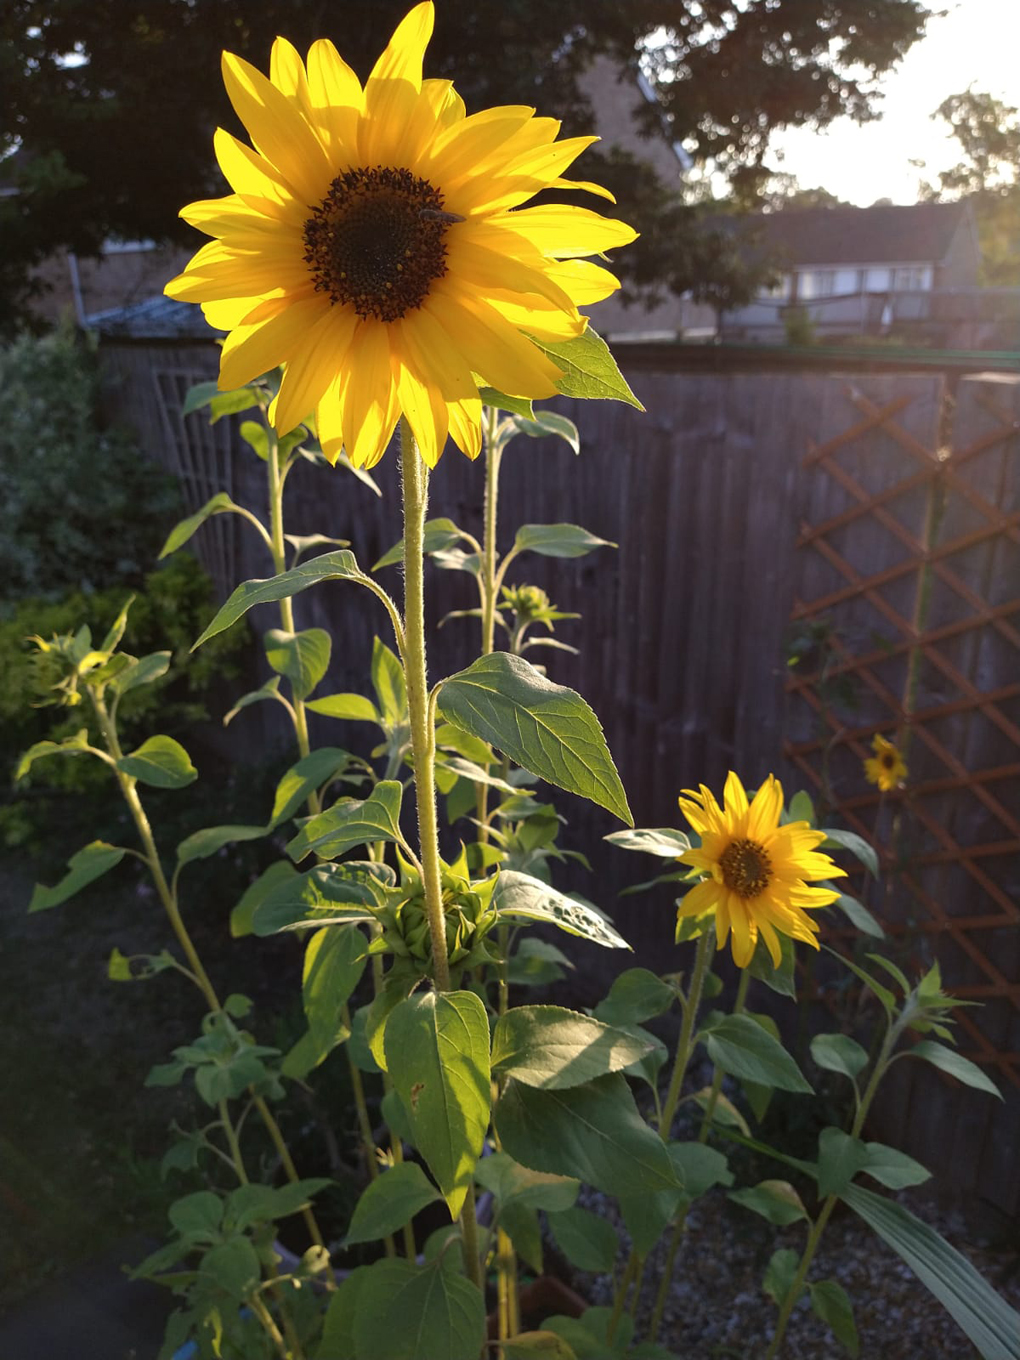 close-up image of sunflowers